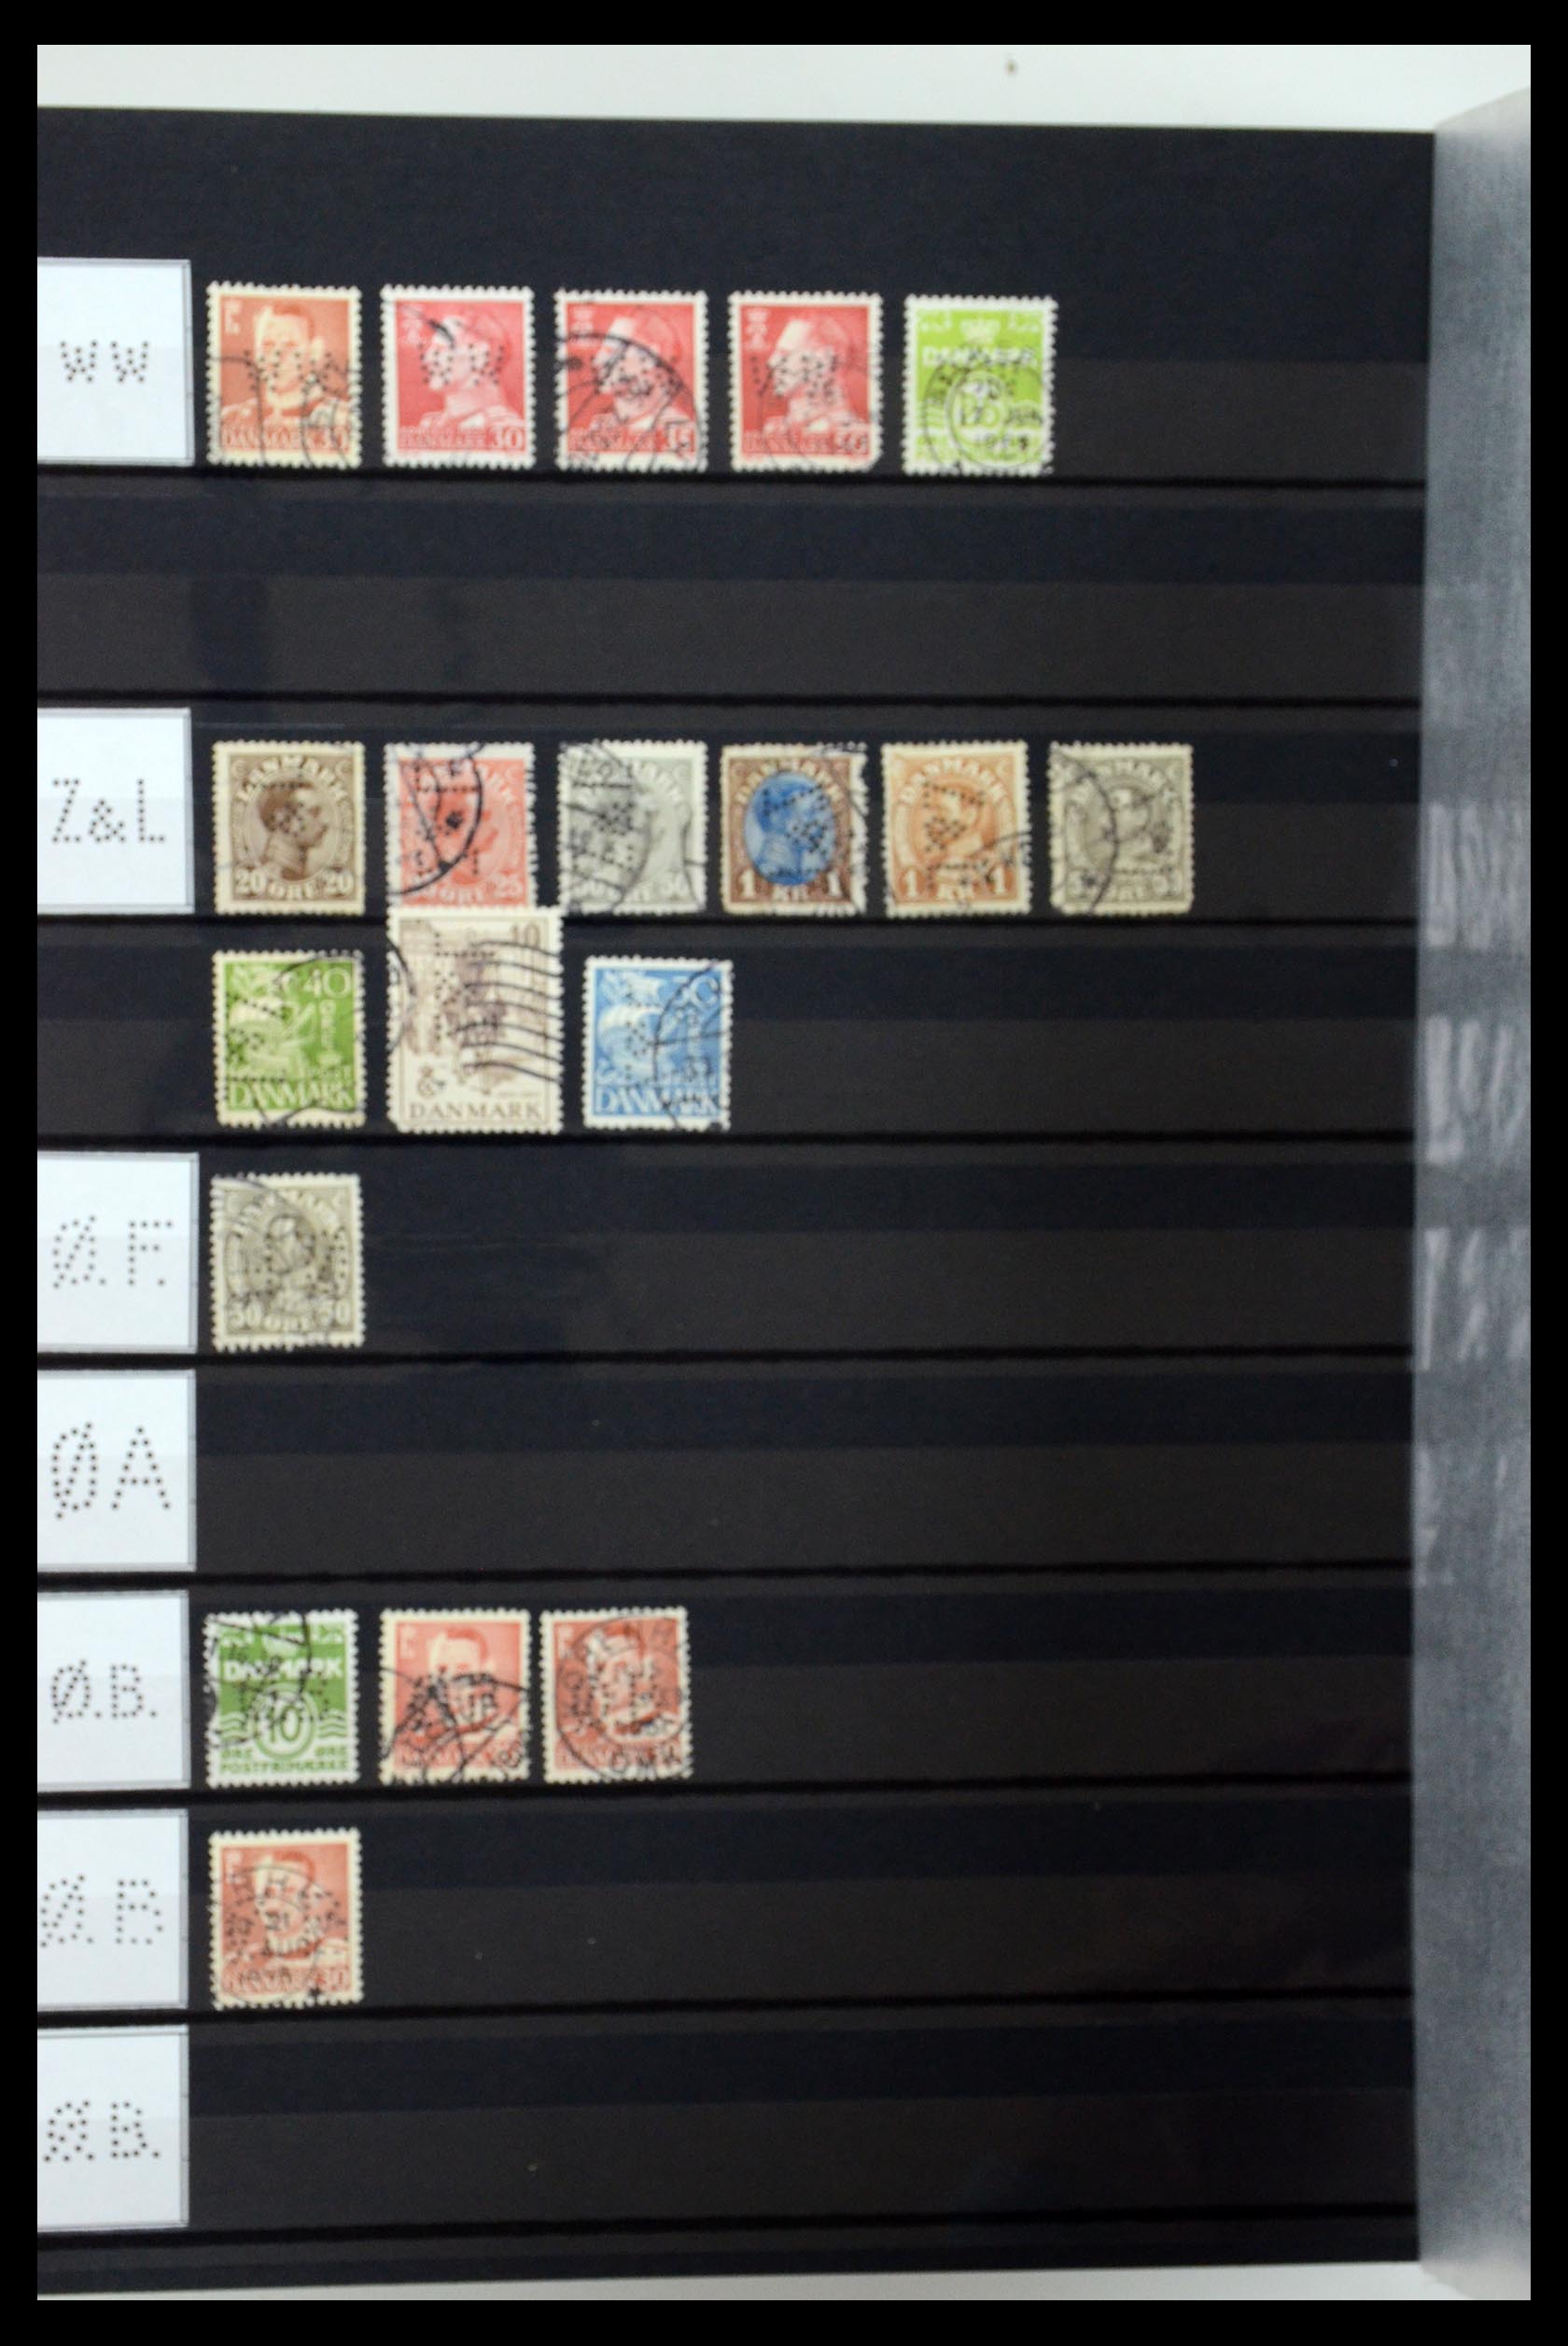 36396 226 - Stamp collection 36396 Denmark perfins.